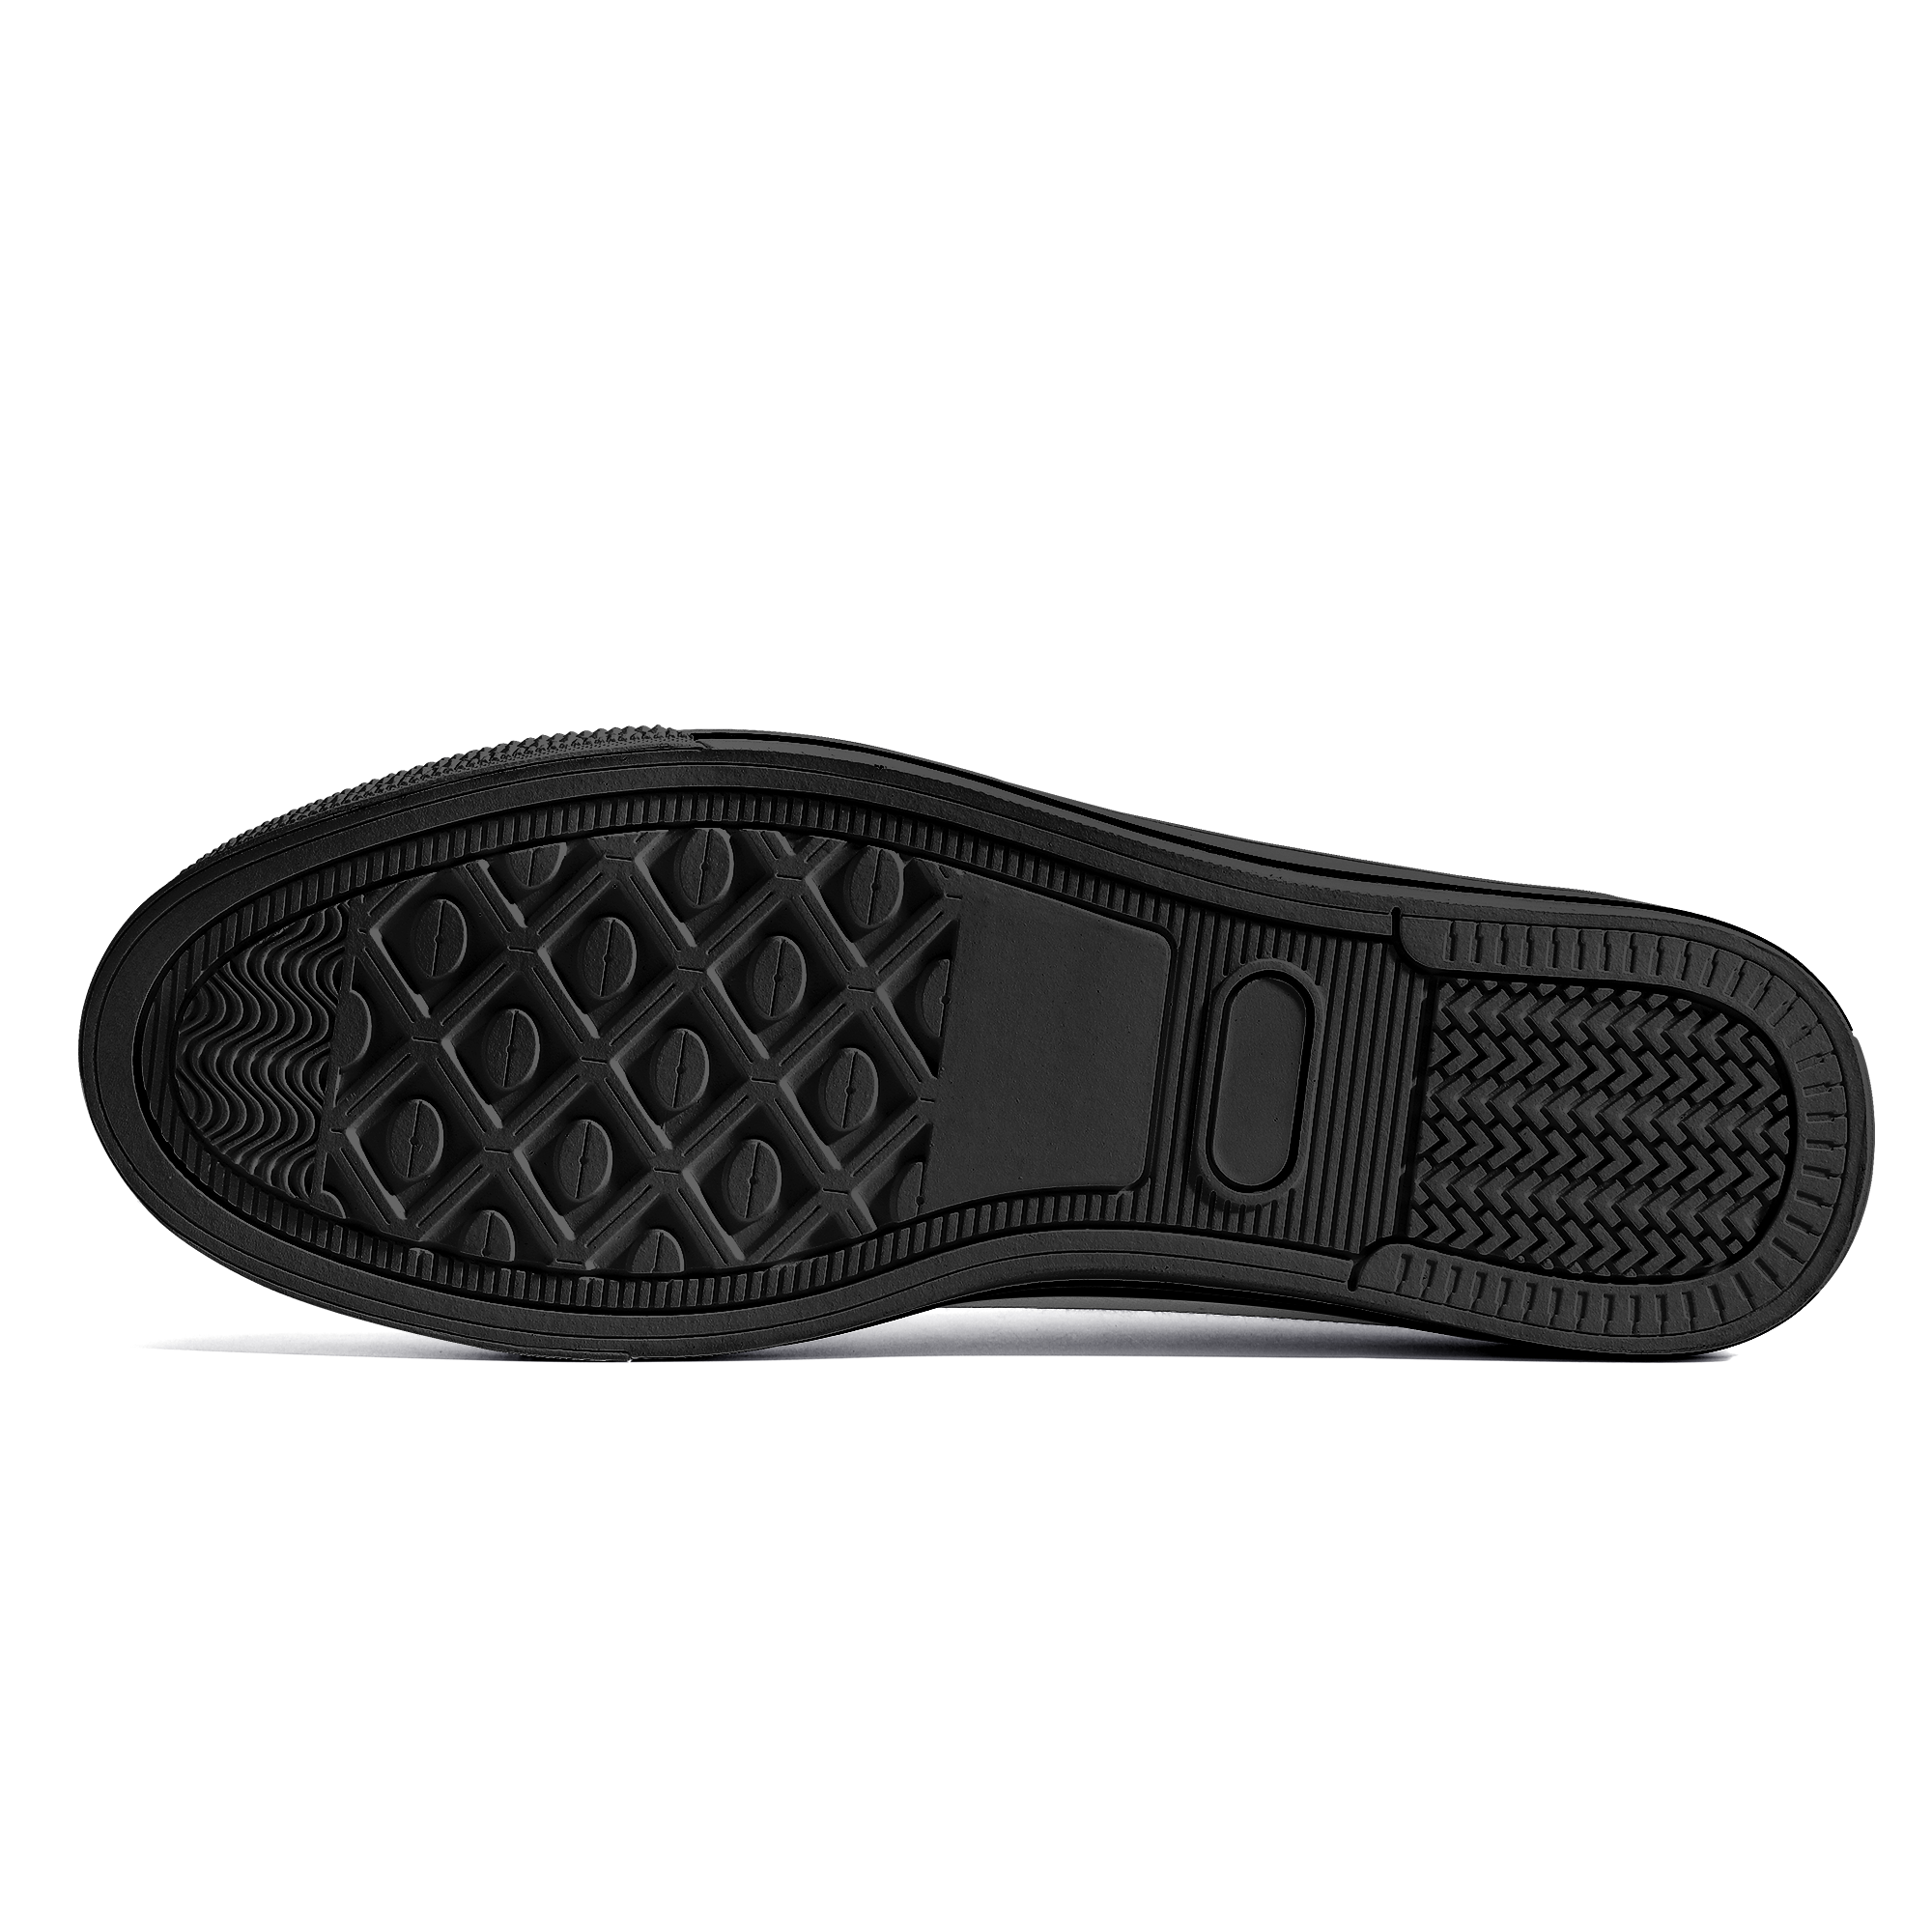 Bull_Airs | Custom Branded Company Shoes | Shoe Zero